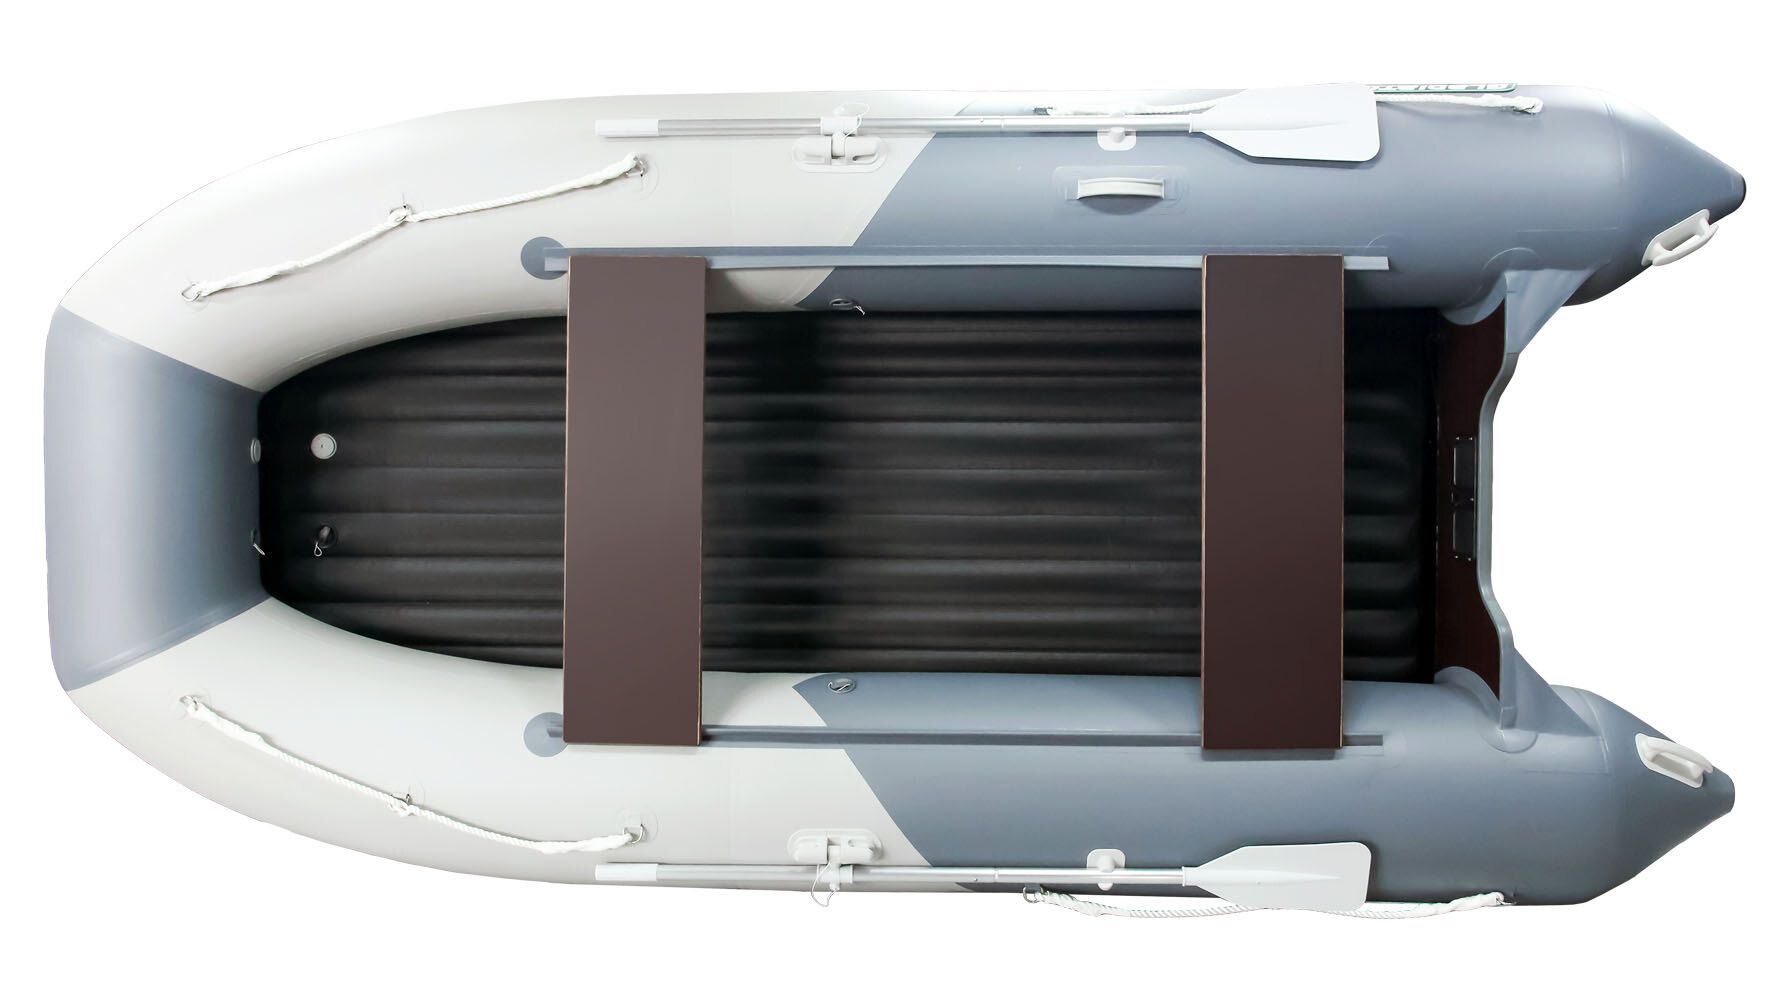 Надувная лодка Gladiator E 420S. Техническая характеристика лодки надувноймоторной из ПВХ Gladiator E 420S. Продажа надувных лодок Гладиатор.